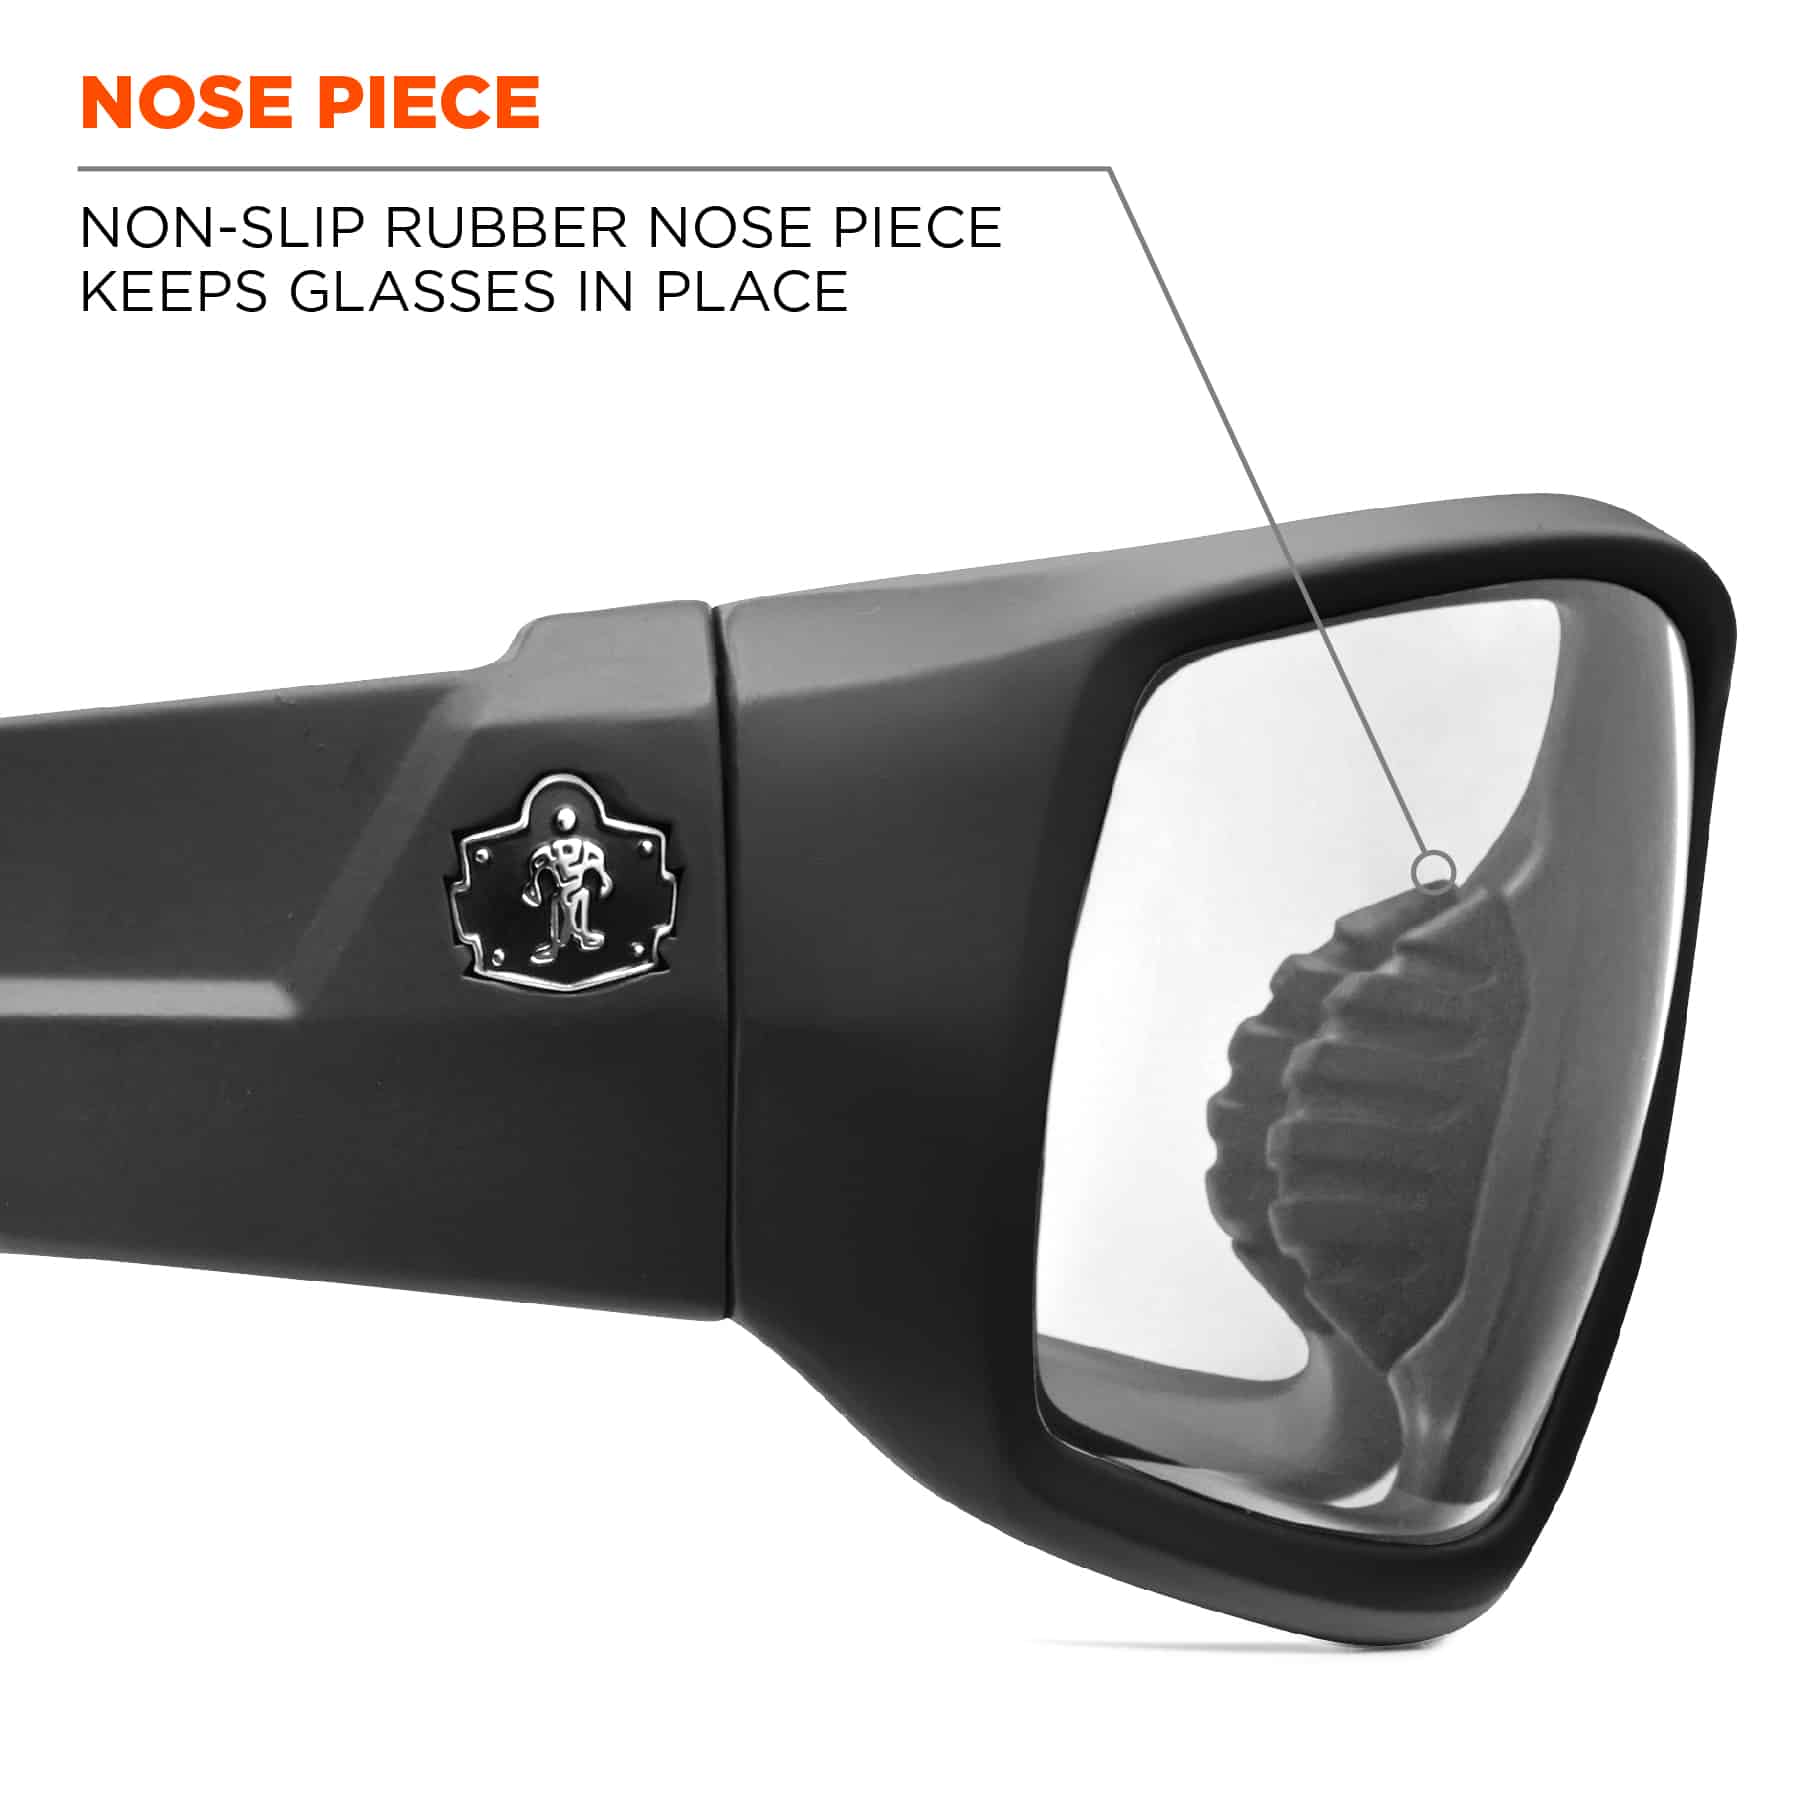 Ergodyne Skullerz Odin Safety Glasses Matte Black Anti Fog Smoke Lens